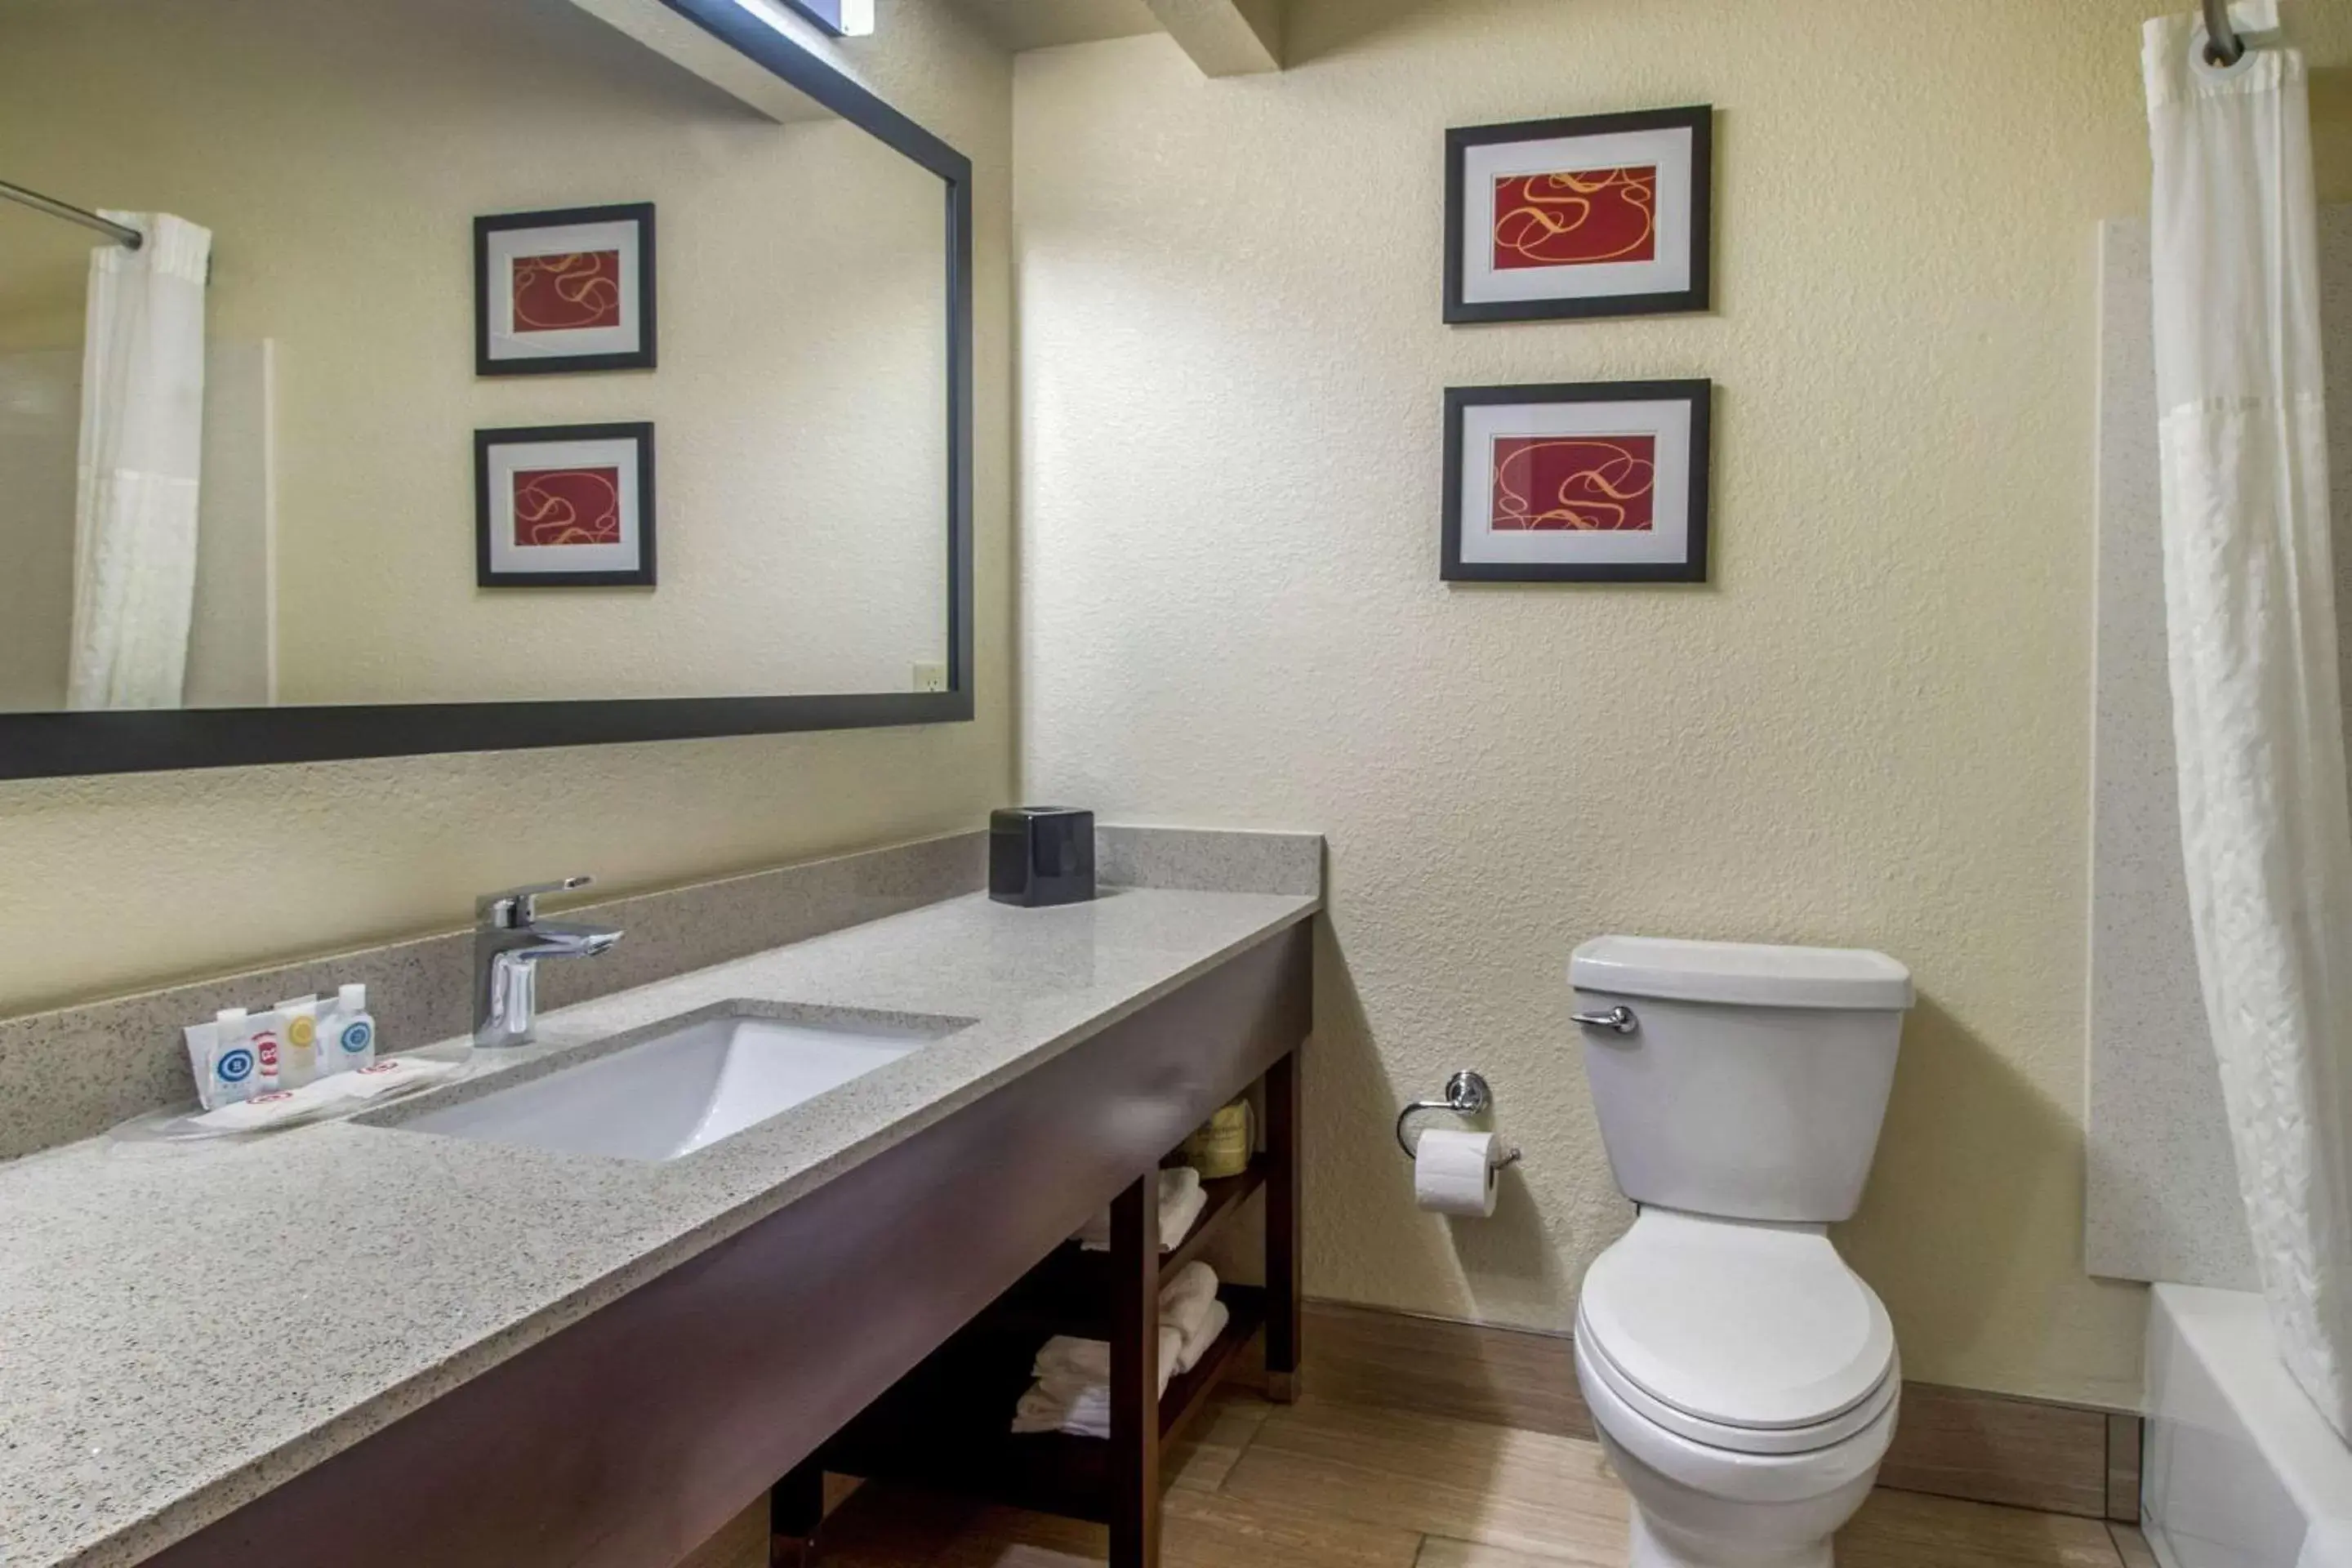 Photo of the whole room, Bathroom in Comfort Suites Danville